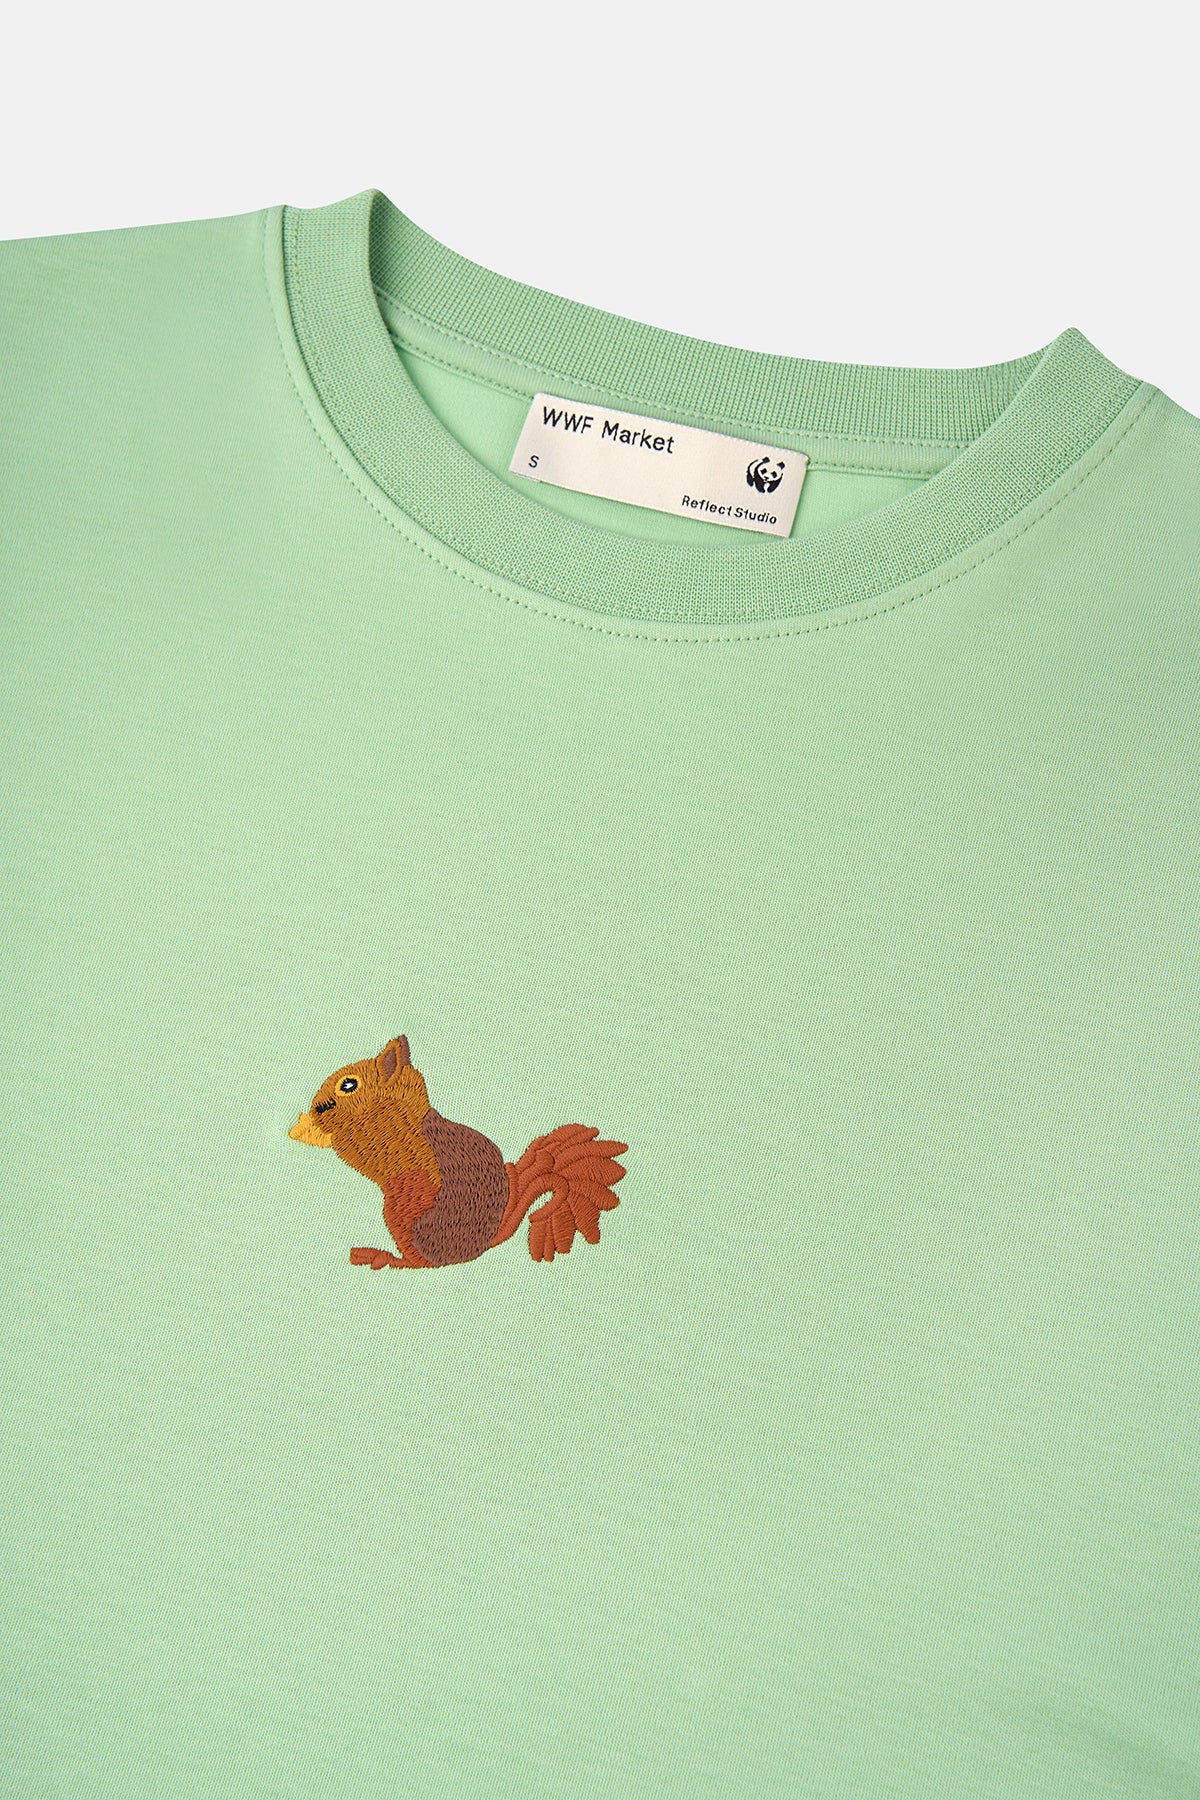 Sincap Premium T-shirt - Su Yeşili